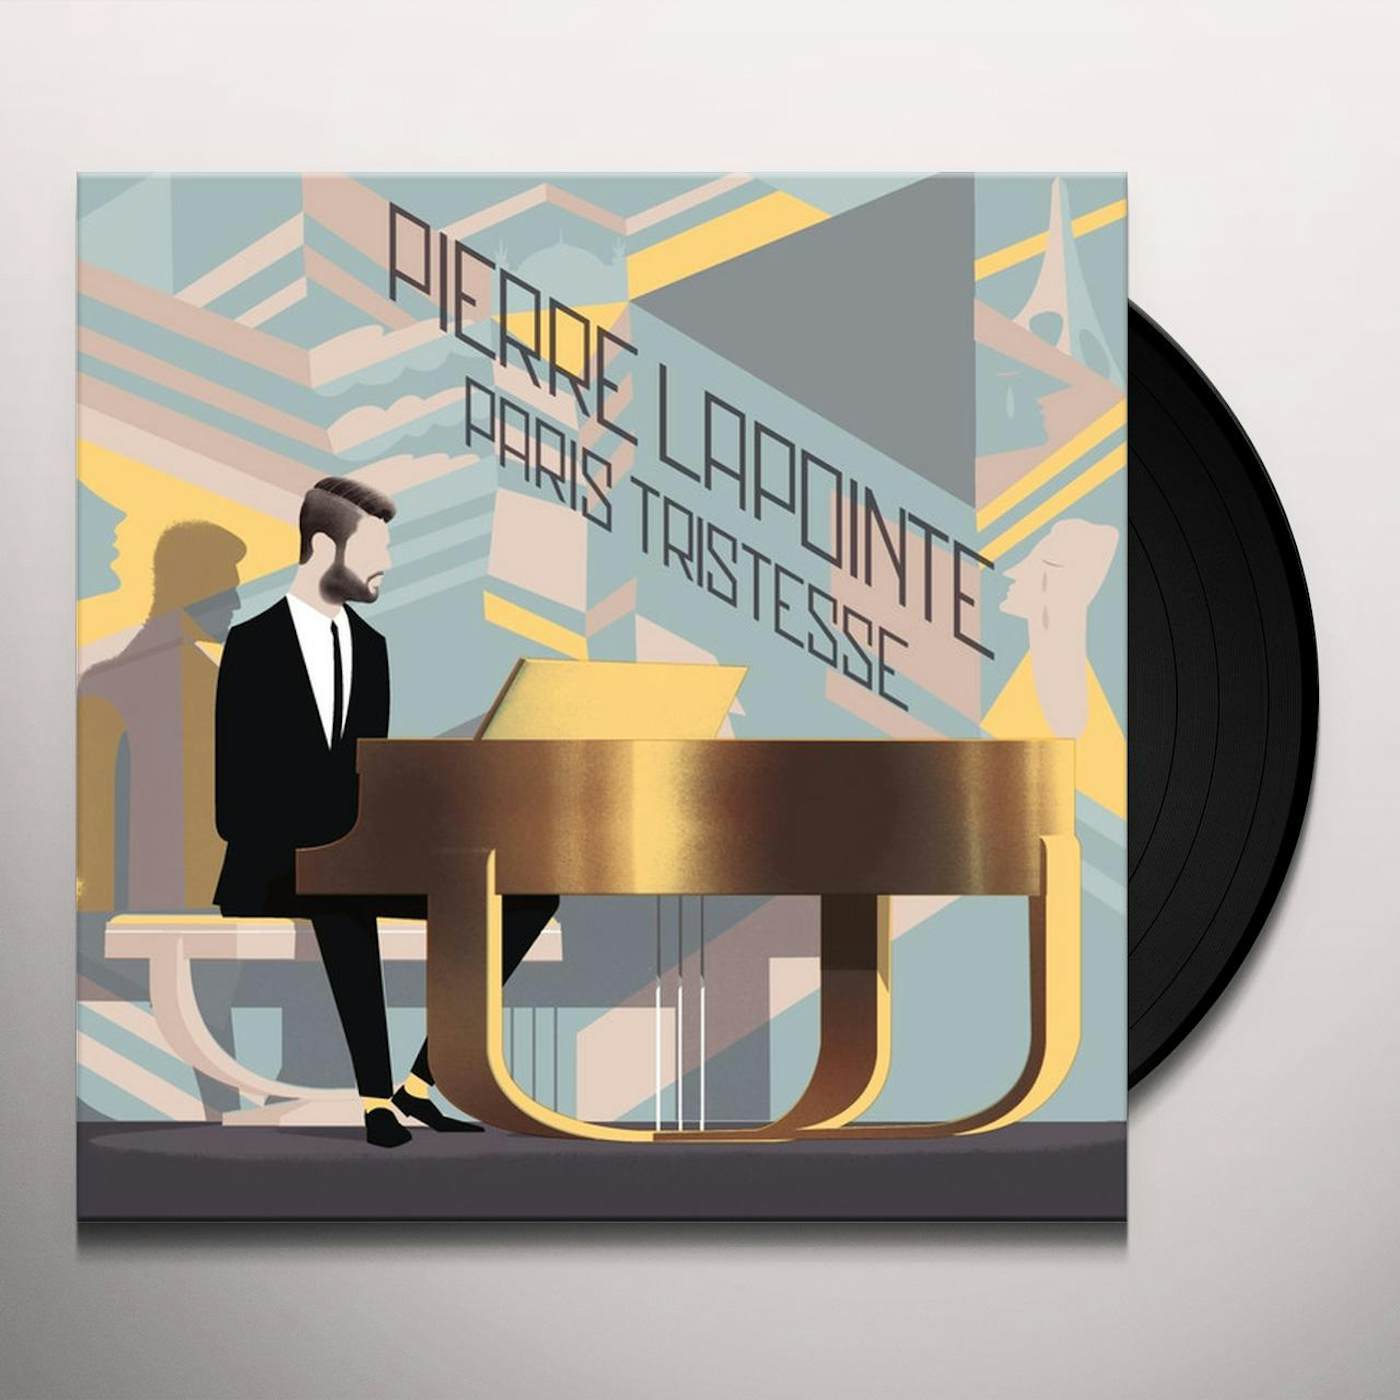 Pierre Lapointe Paris Tristesse Vinyl Record